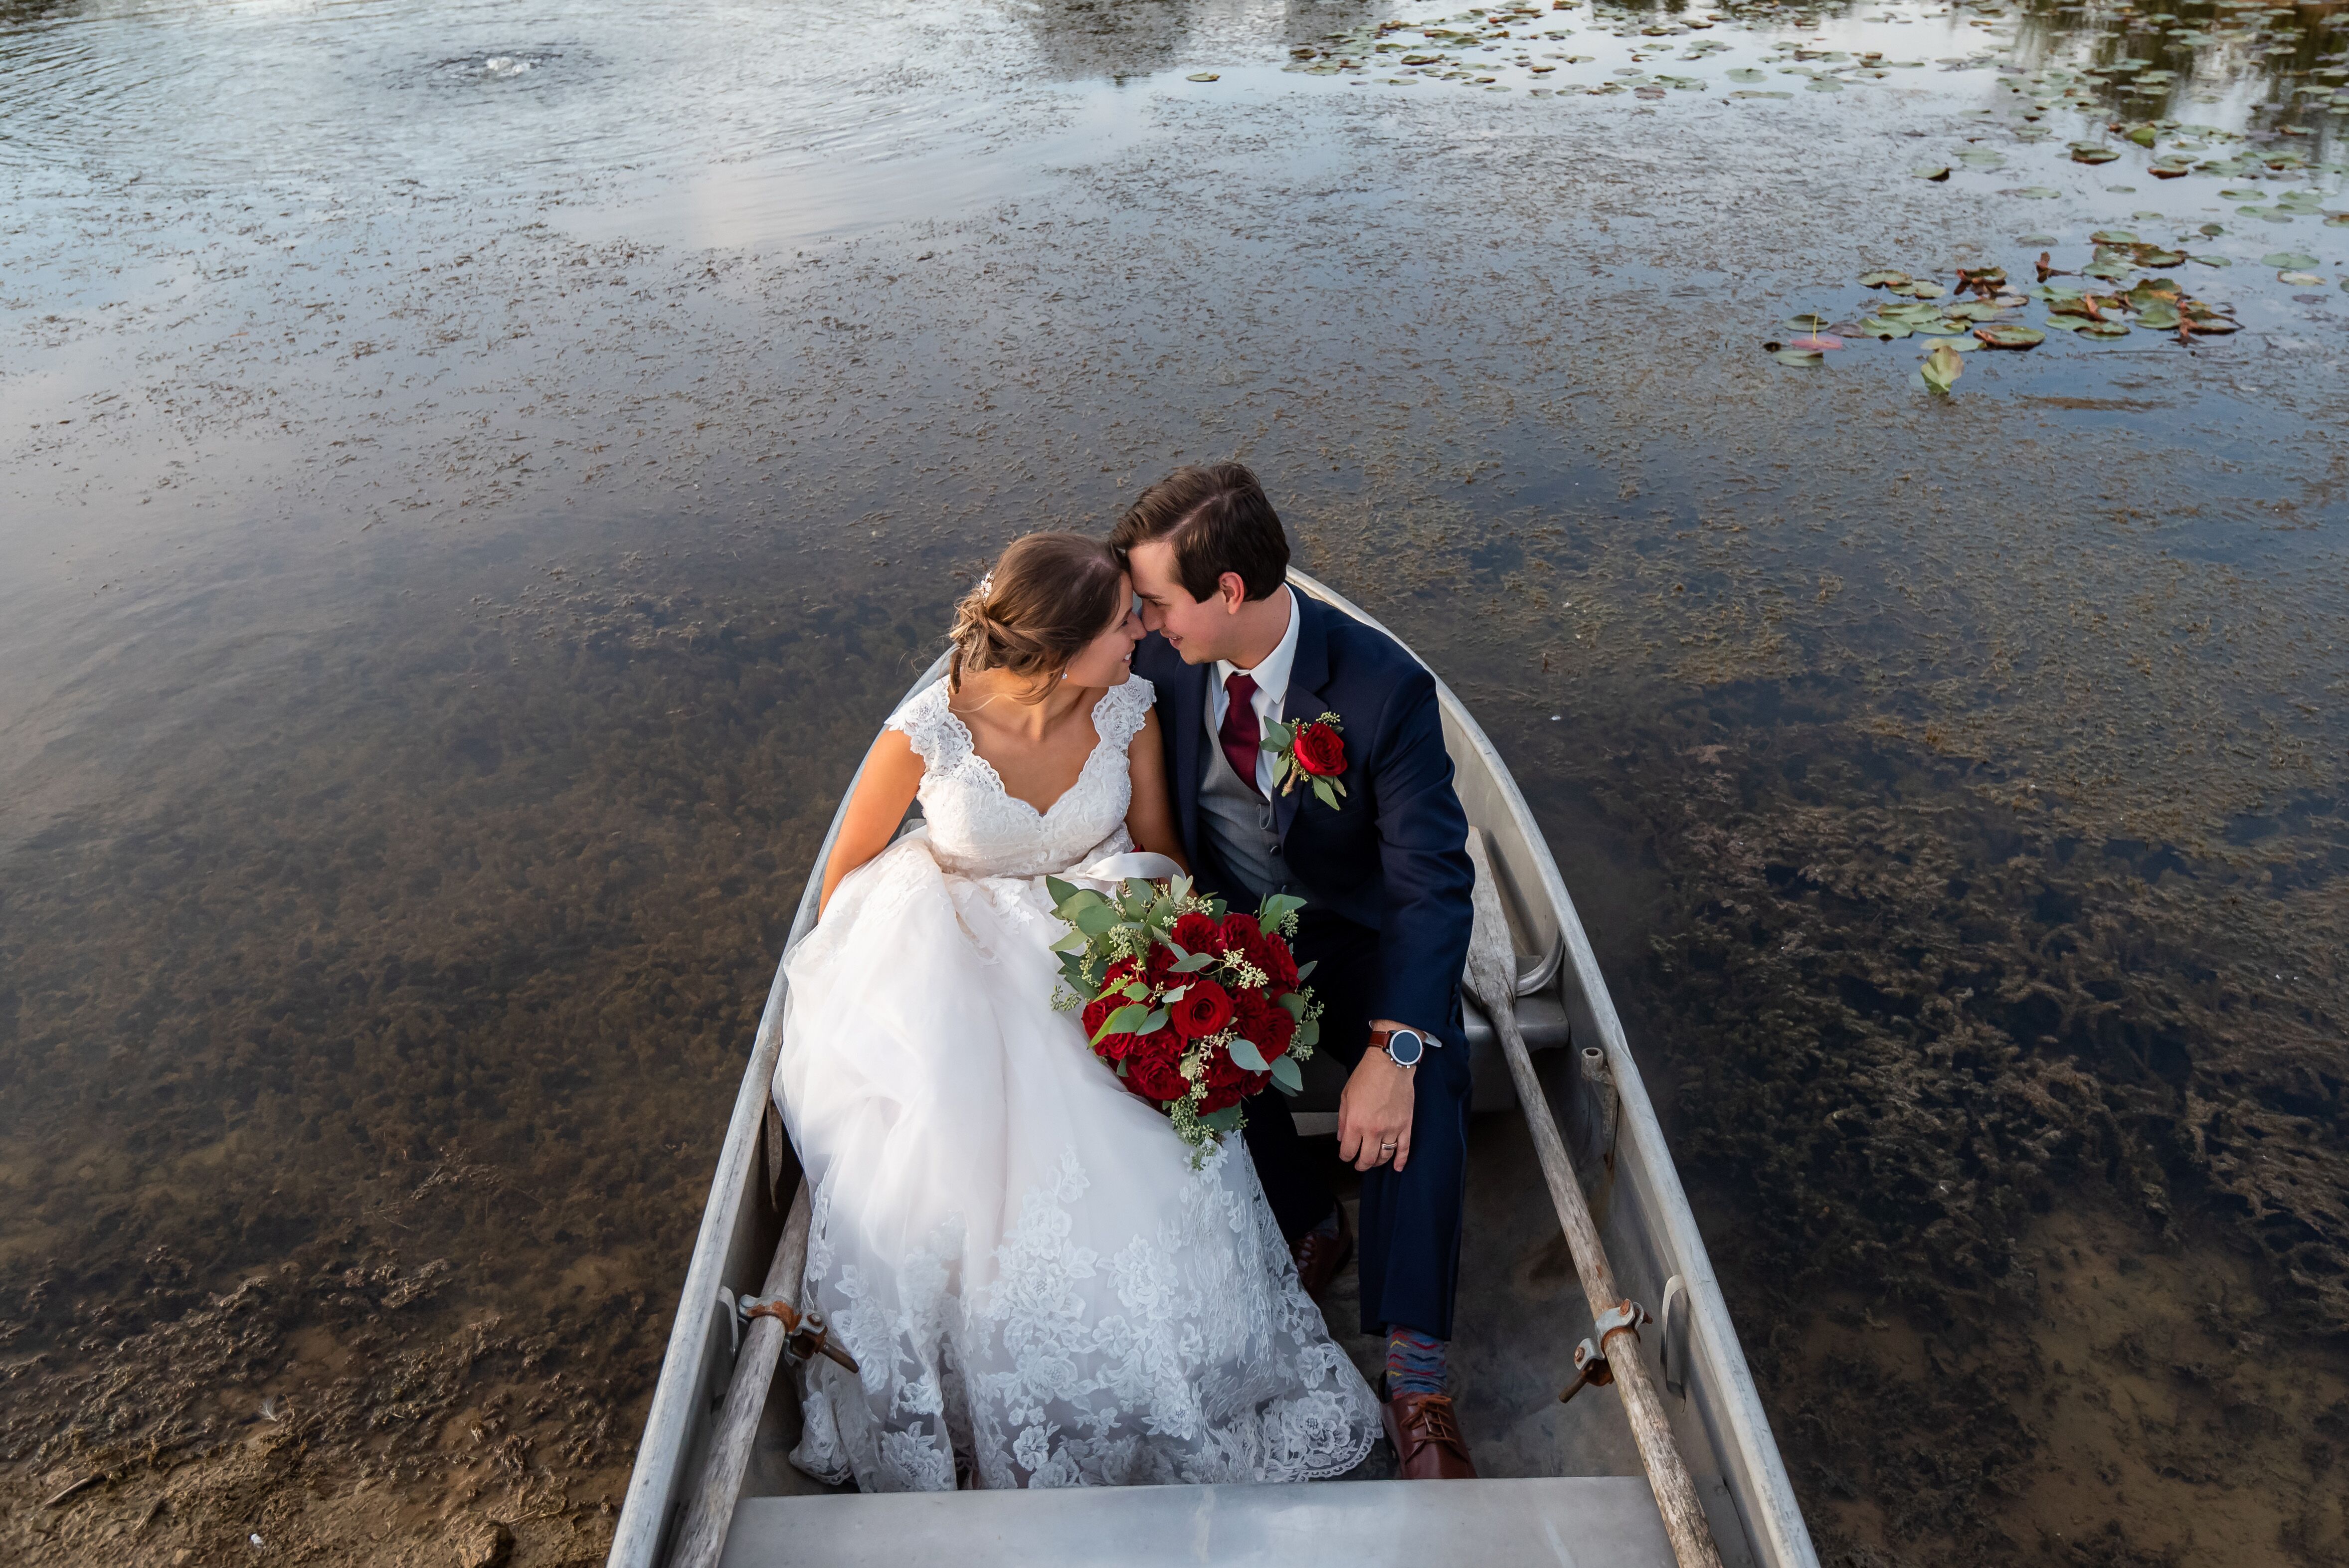 Amanda O'Neill Photography  Wedding Photographers - The Knot